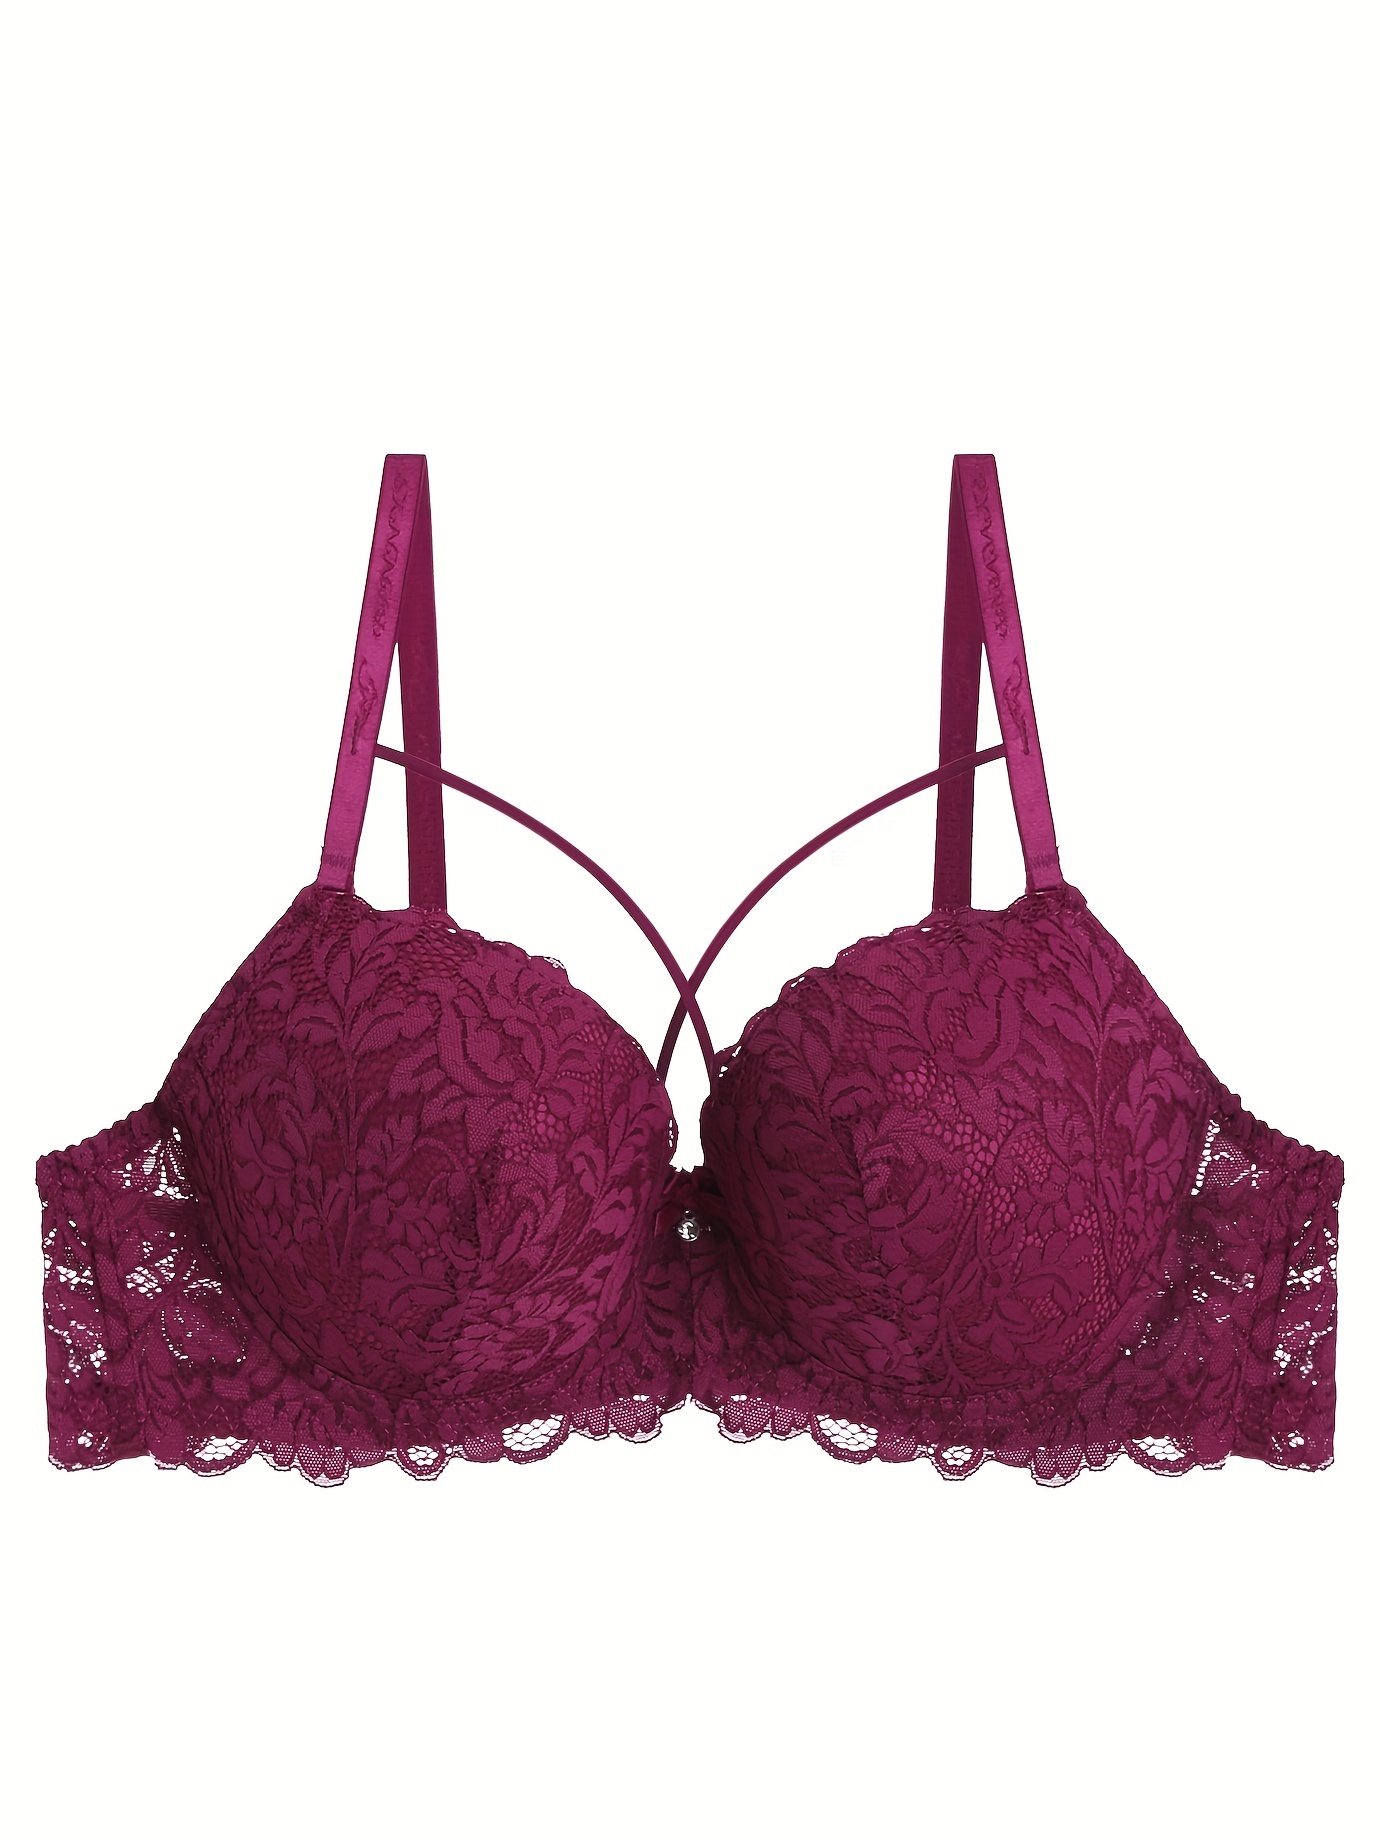 PINK - Victoria's Secret Burgundy Date Lace Push Up Bra Size 32C